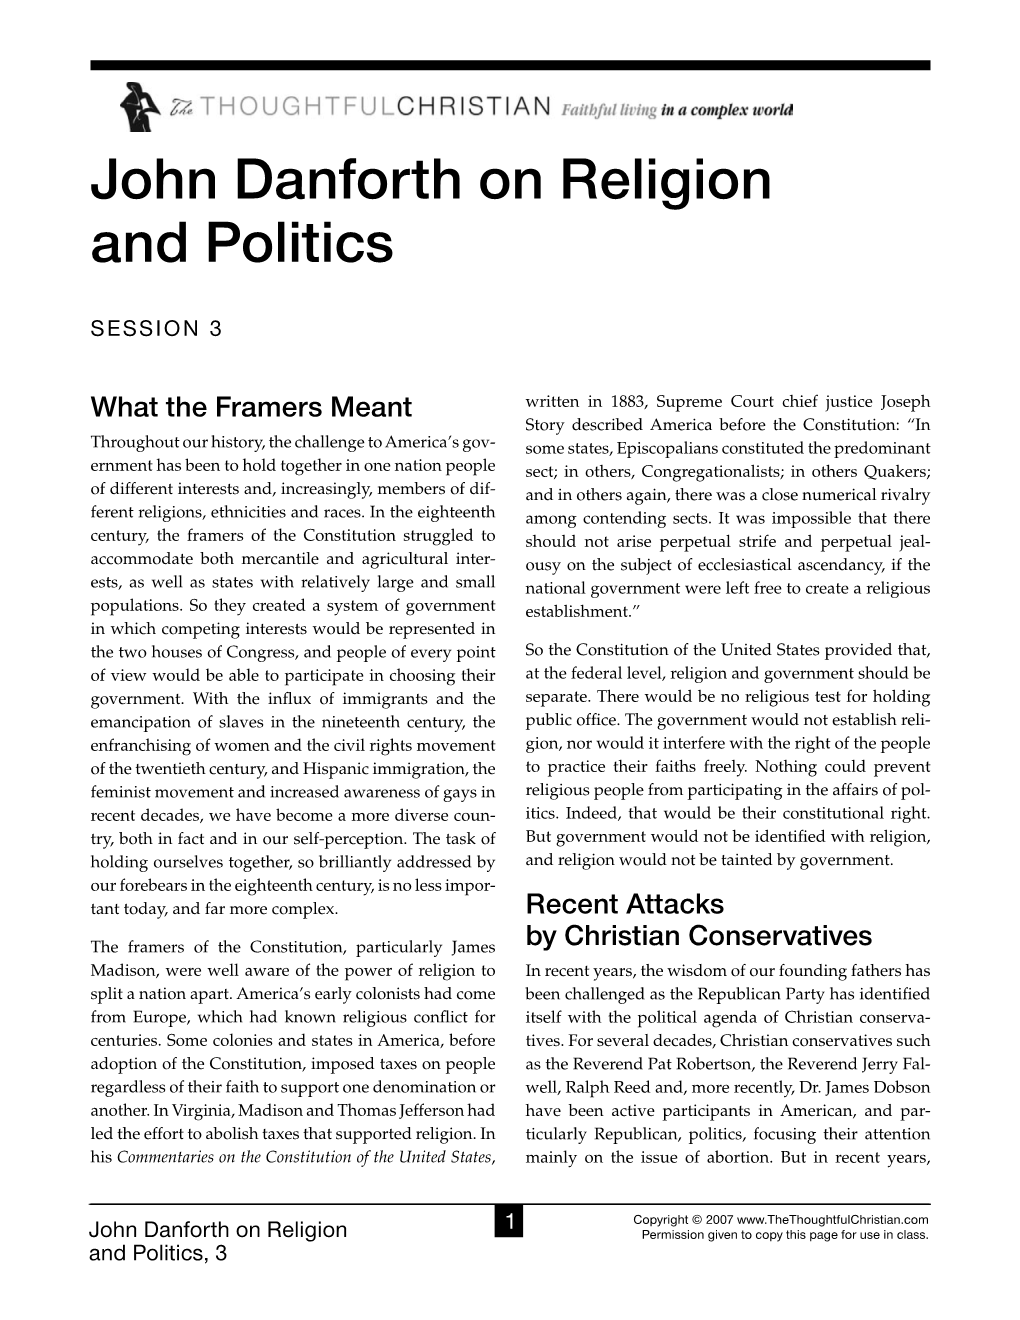 John Danforth on Religion and Politics